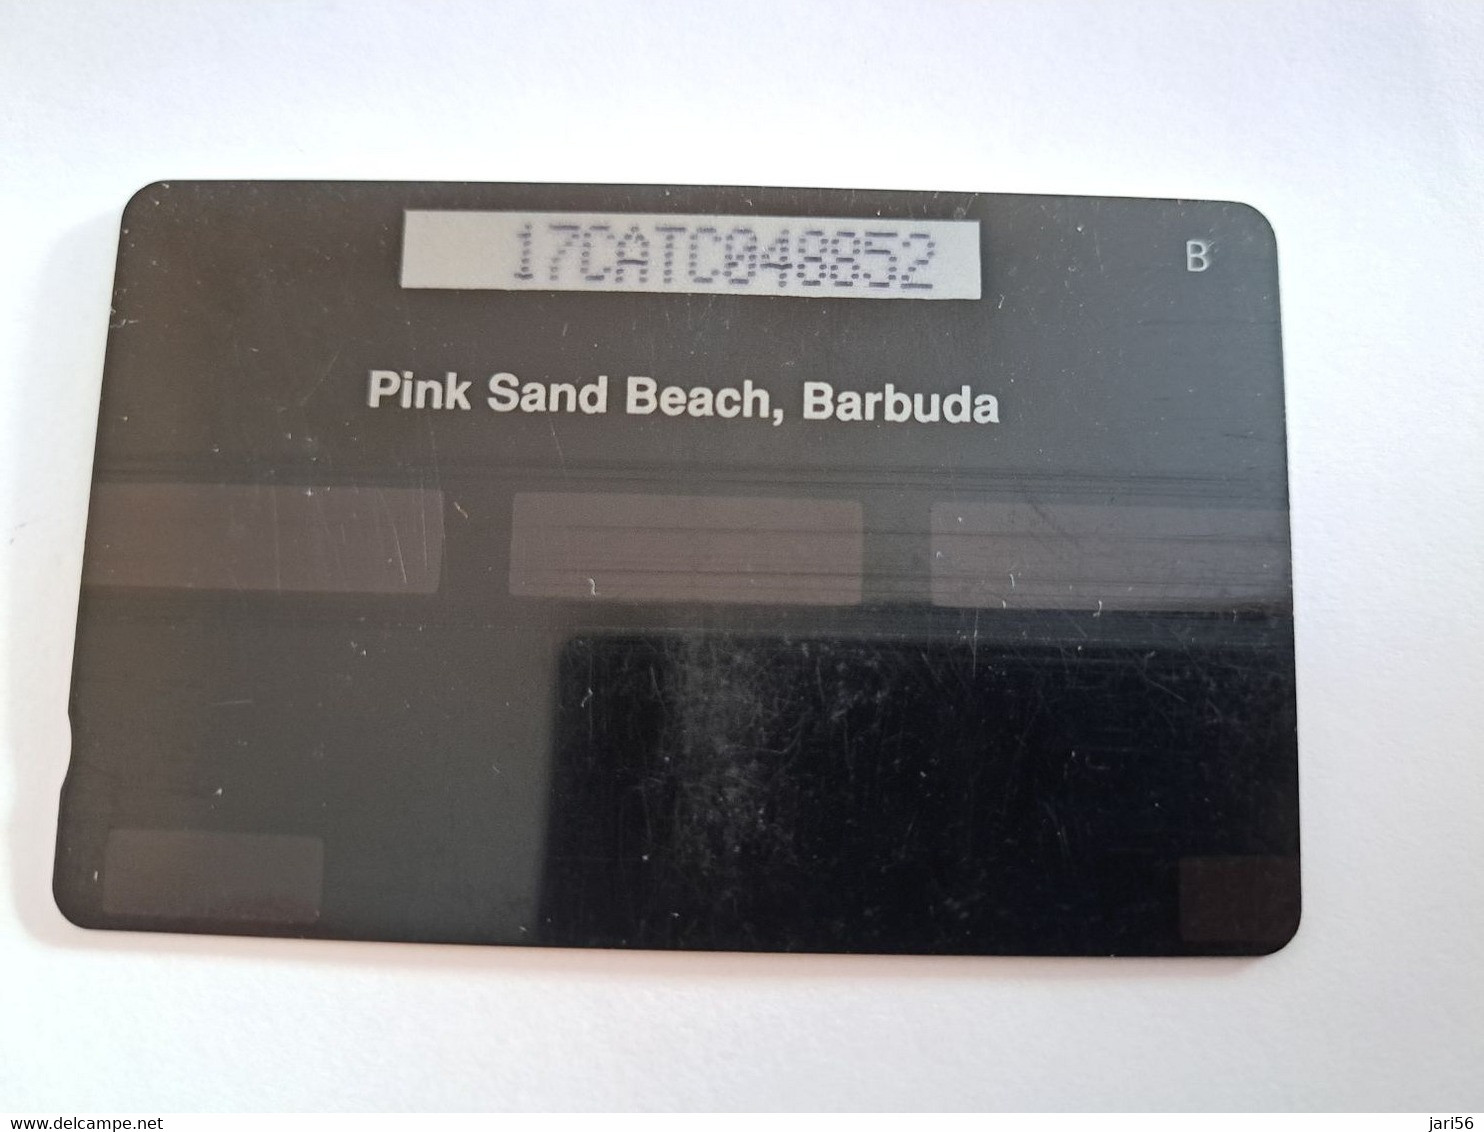 ANTIGUA & BARBUDA $ 20  BARBUDA PINK SAND BEACH          ANT-17C  CONTROL NR: 17CATC      NEW C&W LOGO **10686** - Antigua Y Barbuda